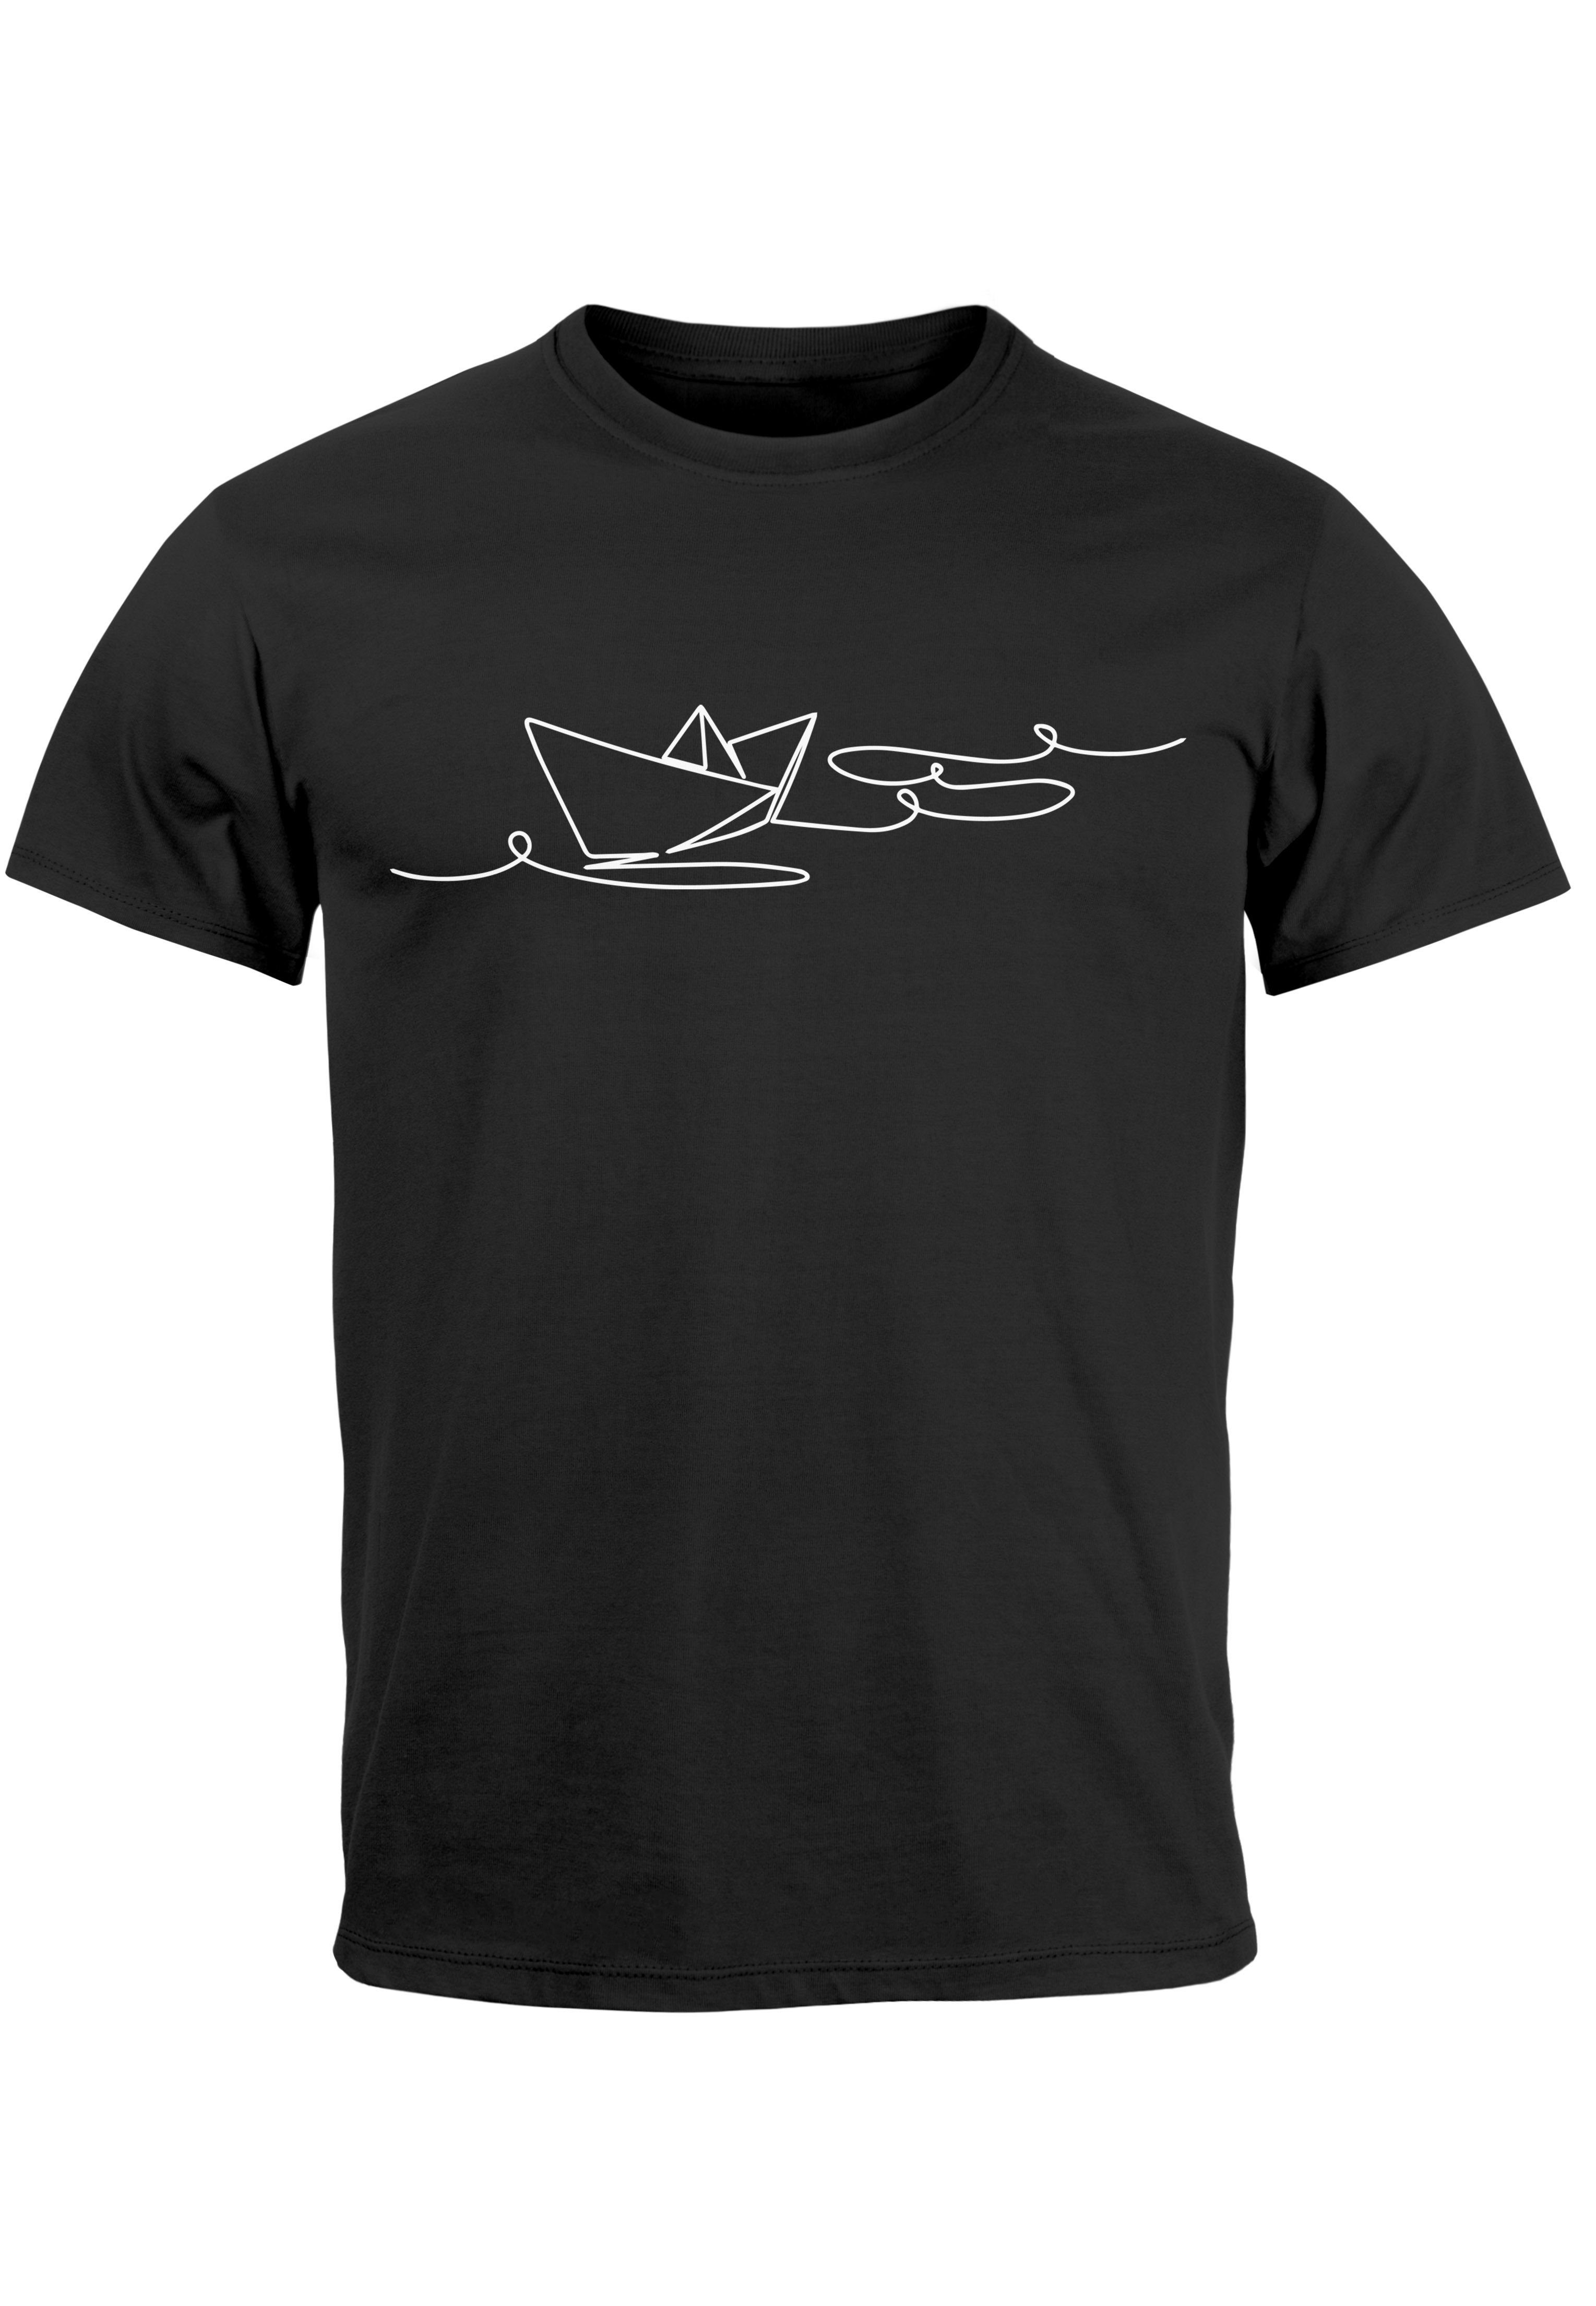 Origami Herren Polygon Print schwarz Boot T-Shirt Aufdruck Print Print-Shirt Neverless mit Fashi Papier-Schiff